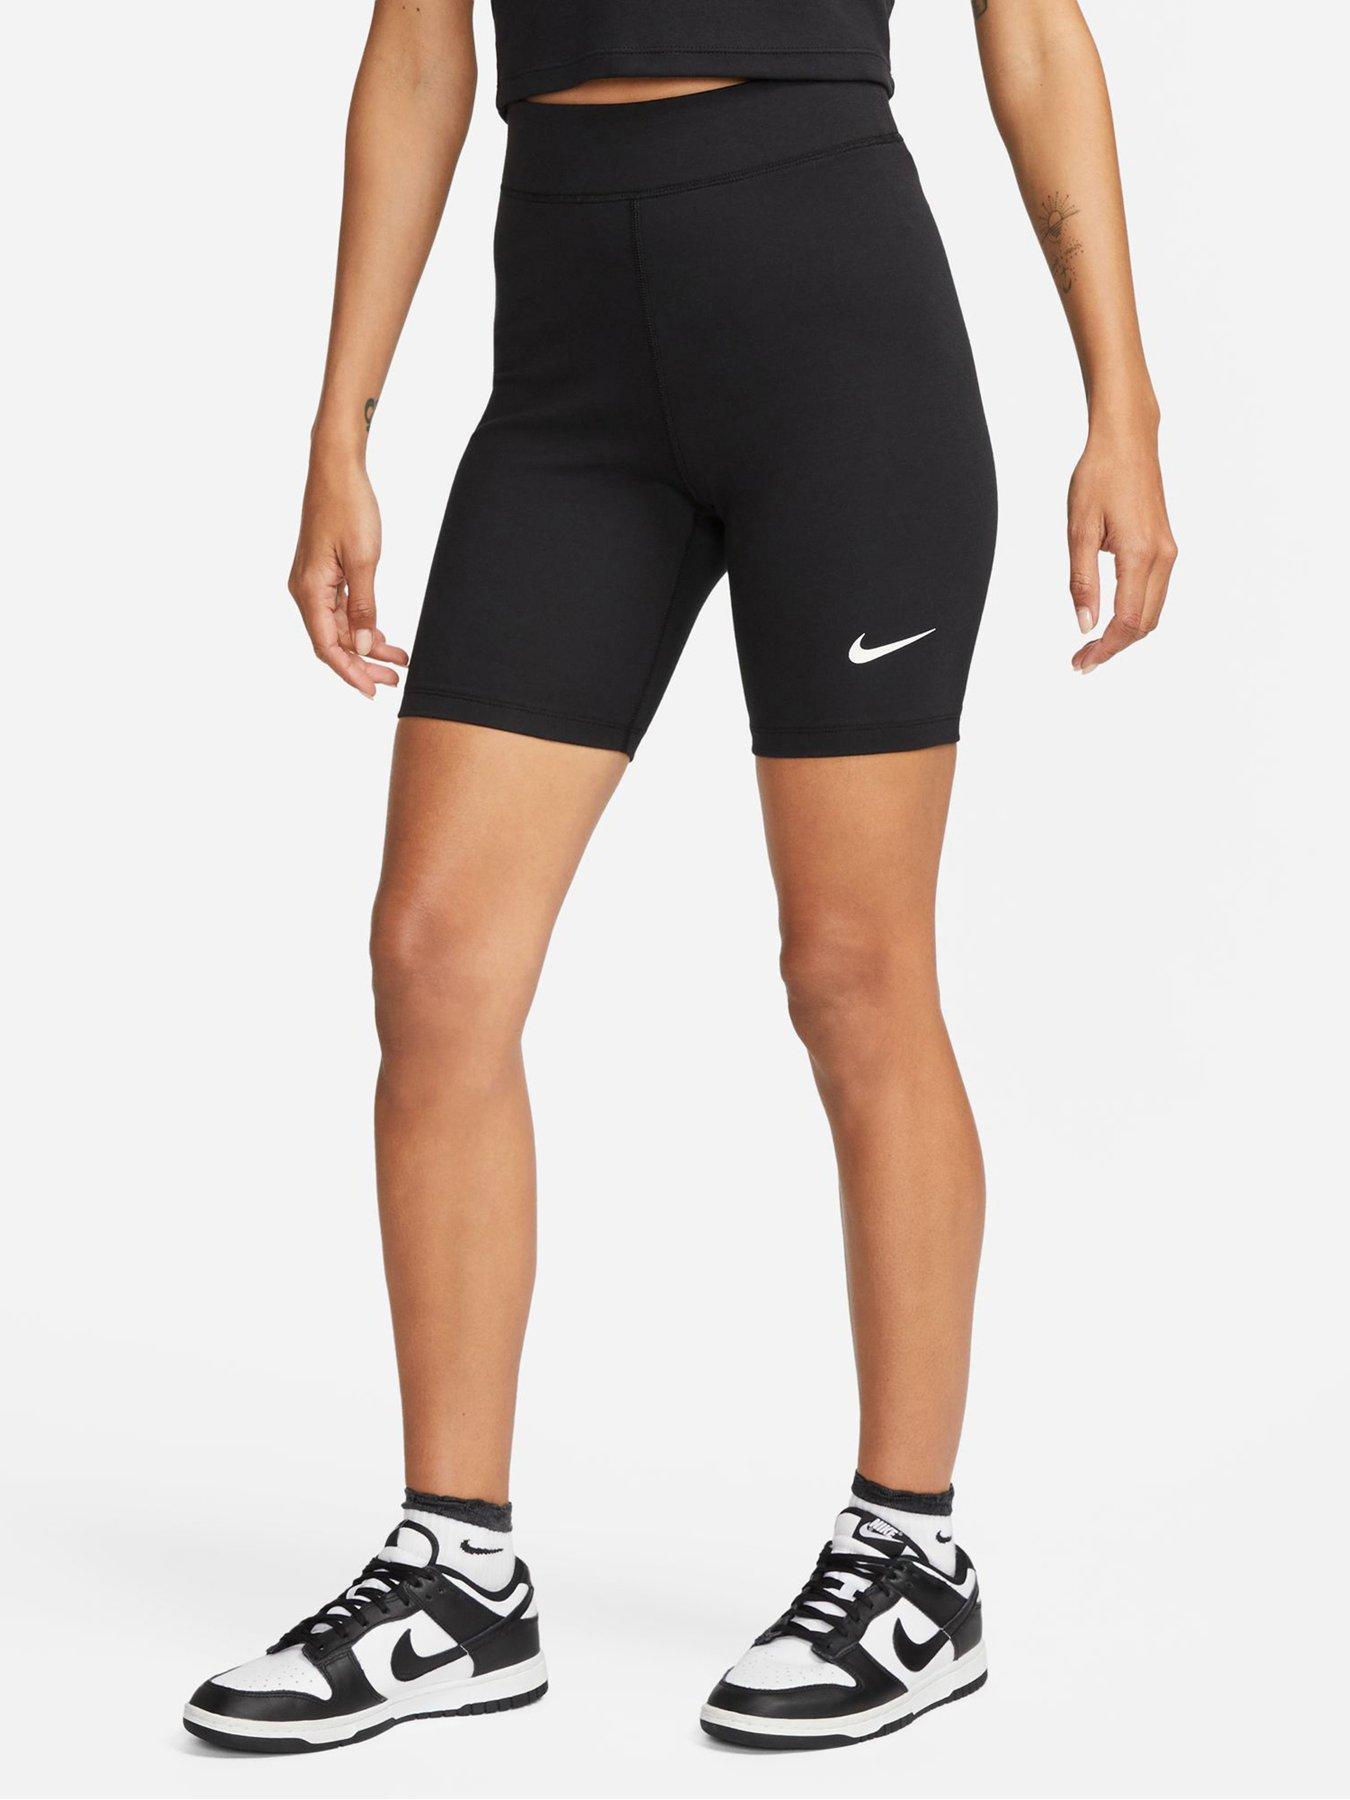 Workout Shorts, Women's Sports Shorts